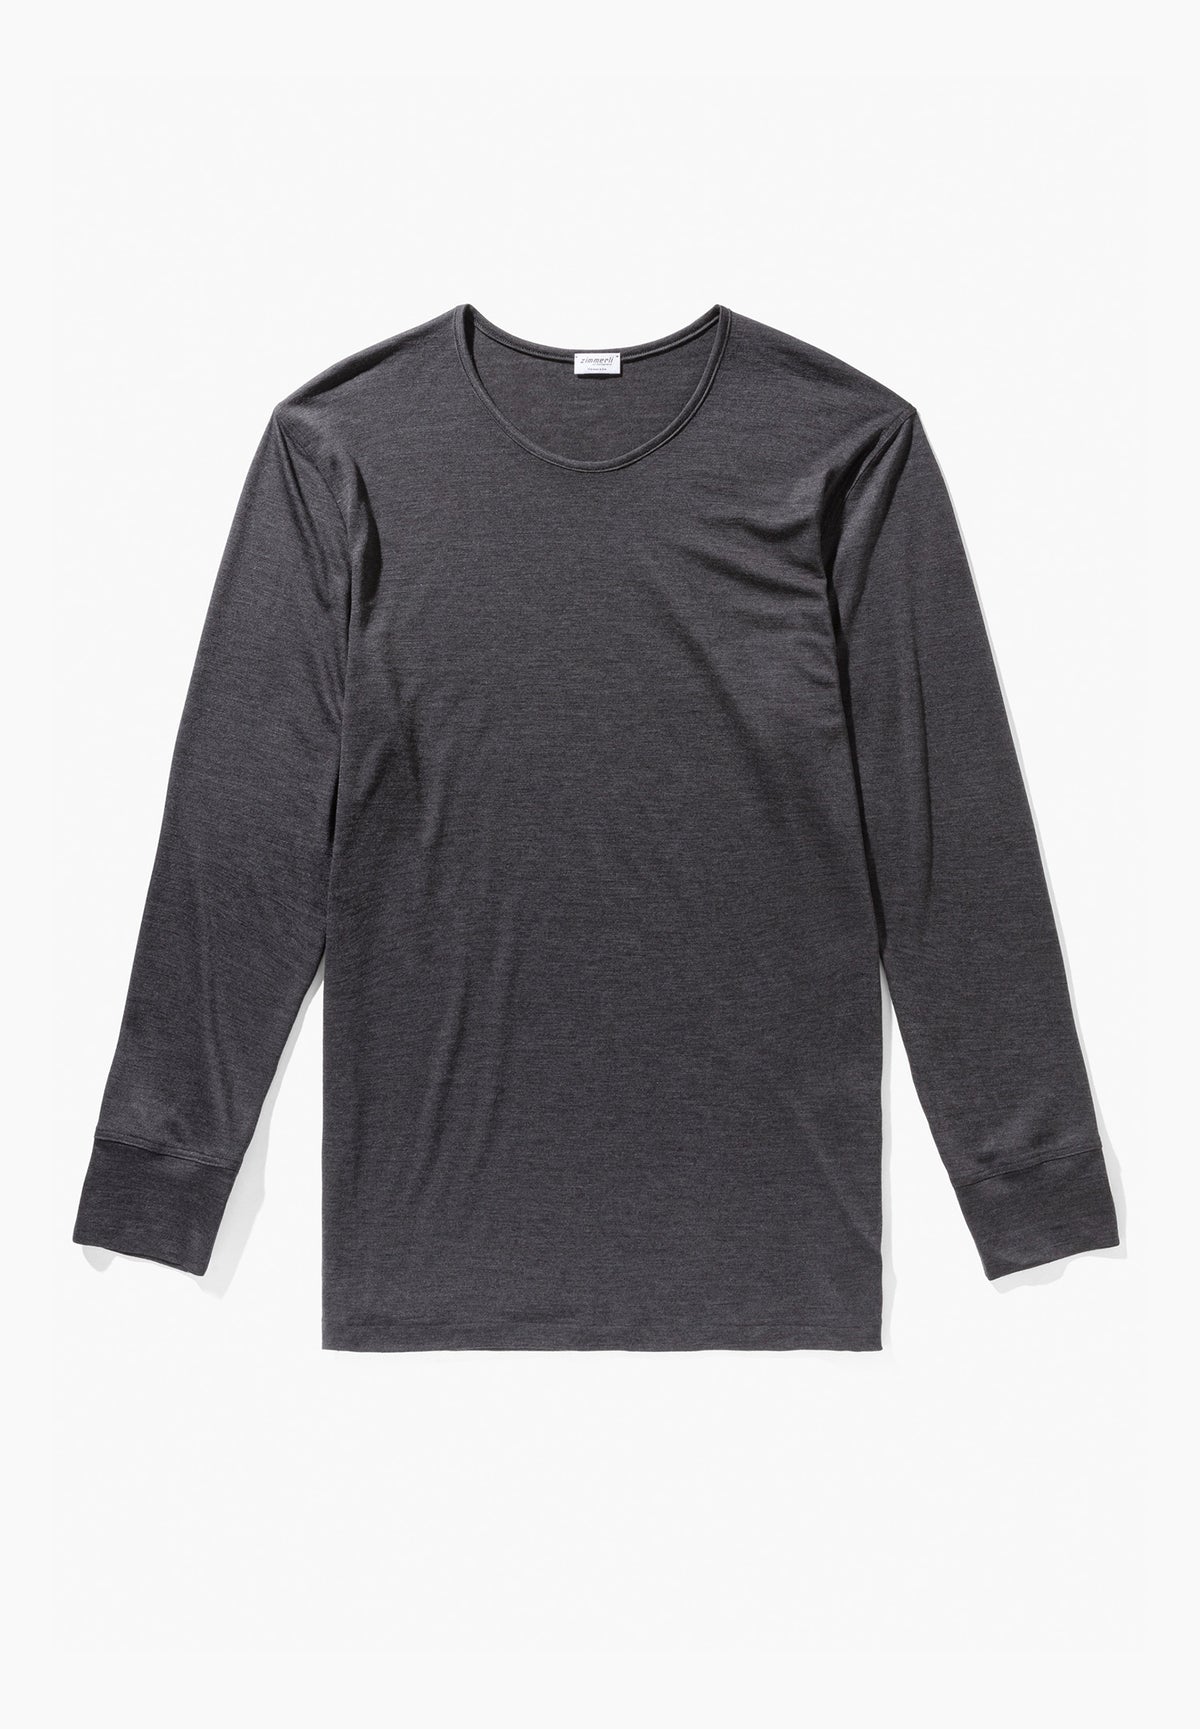 Wool &amp; Silk | T-Shirt langarm - charcoal